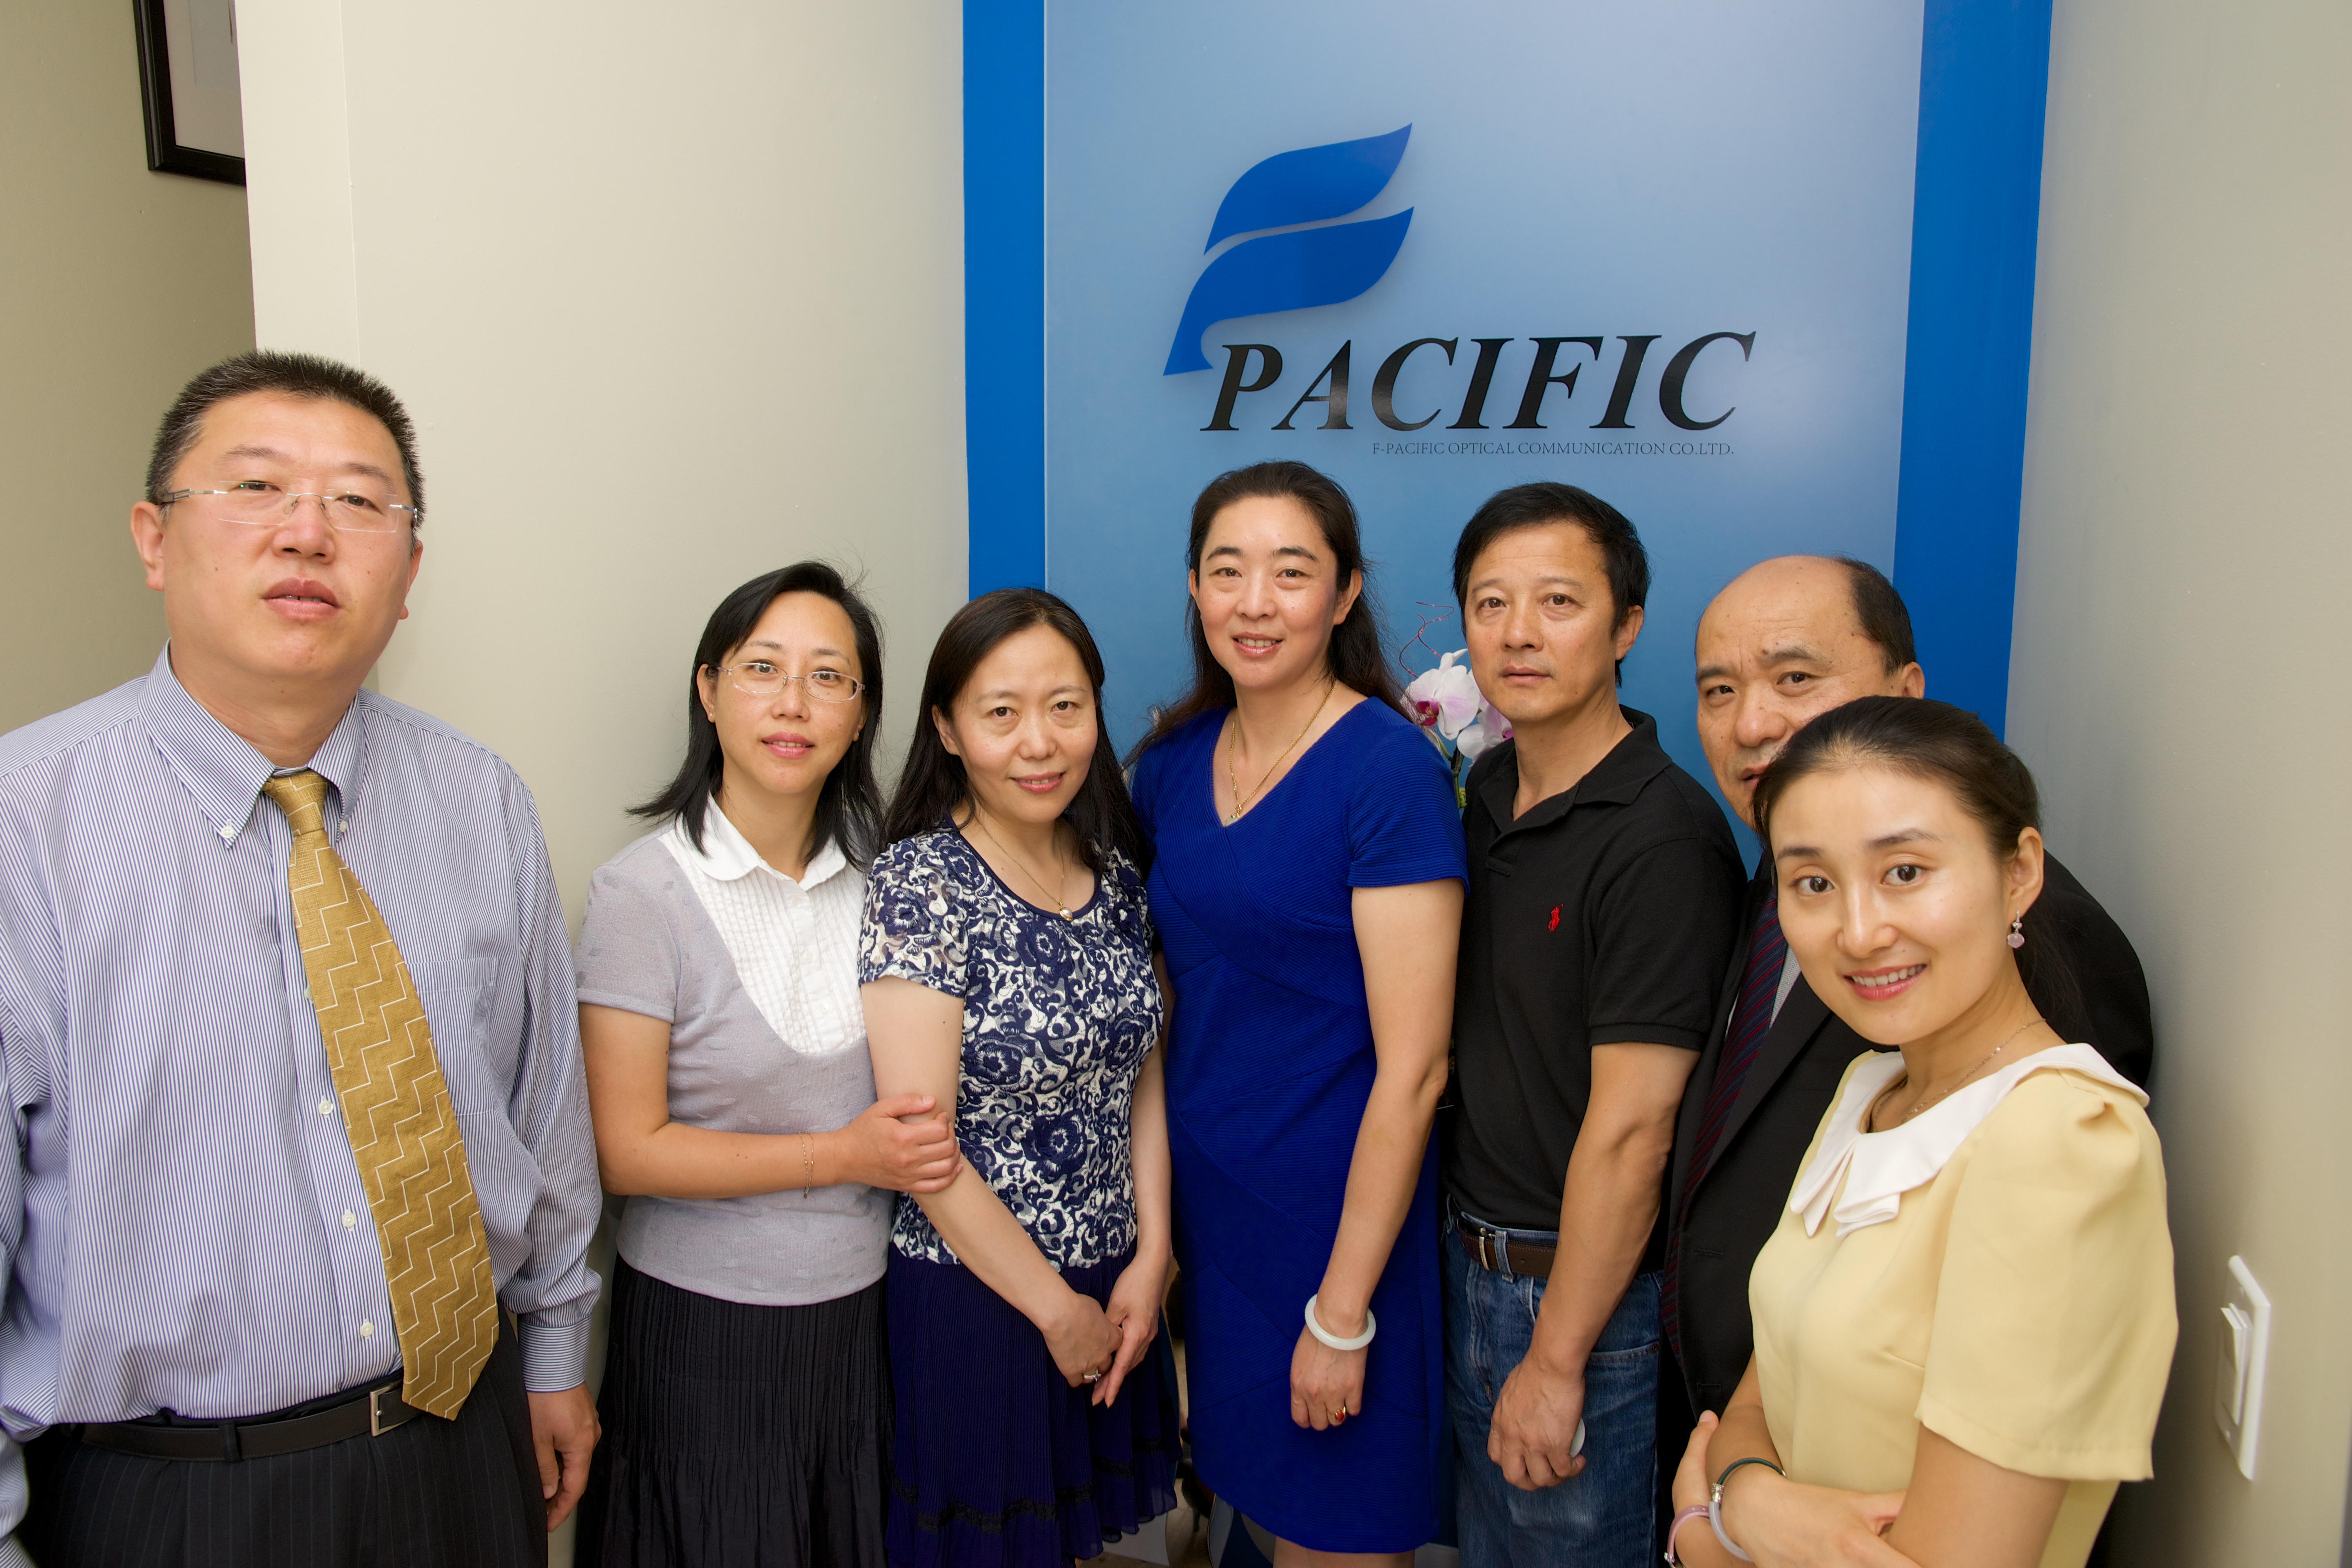 F-Pacific, public relations, optical communications